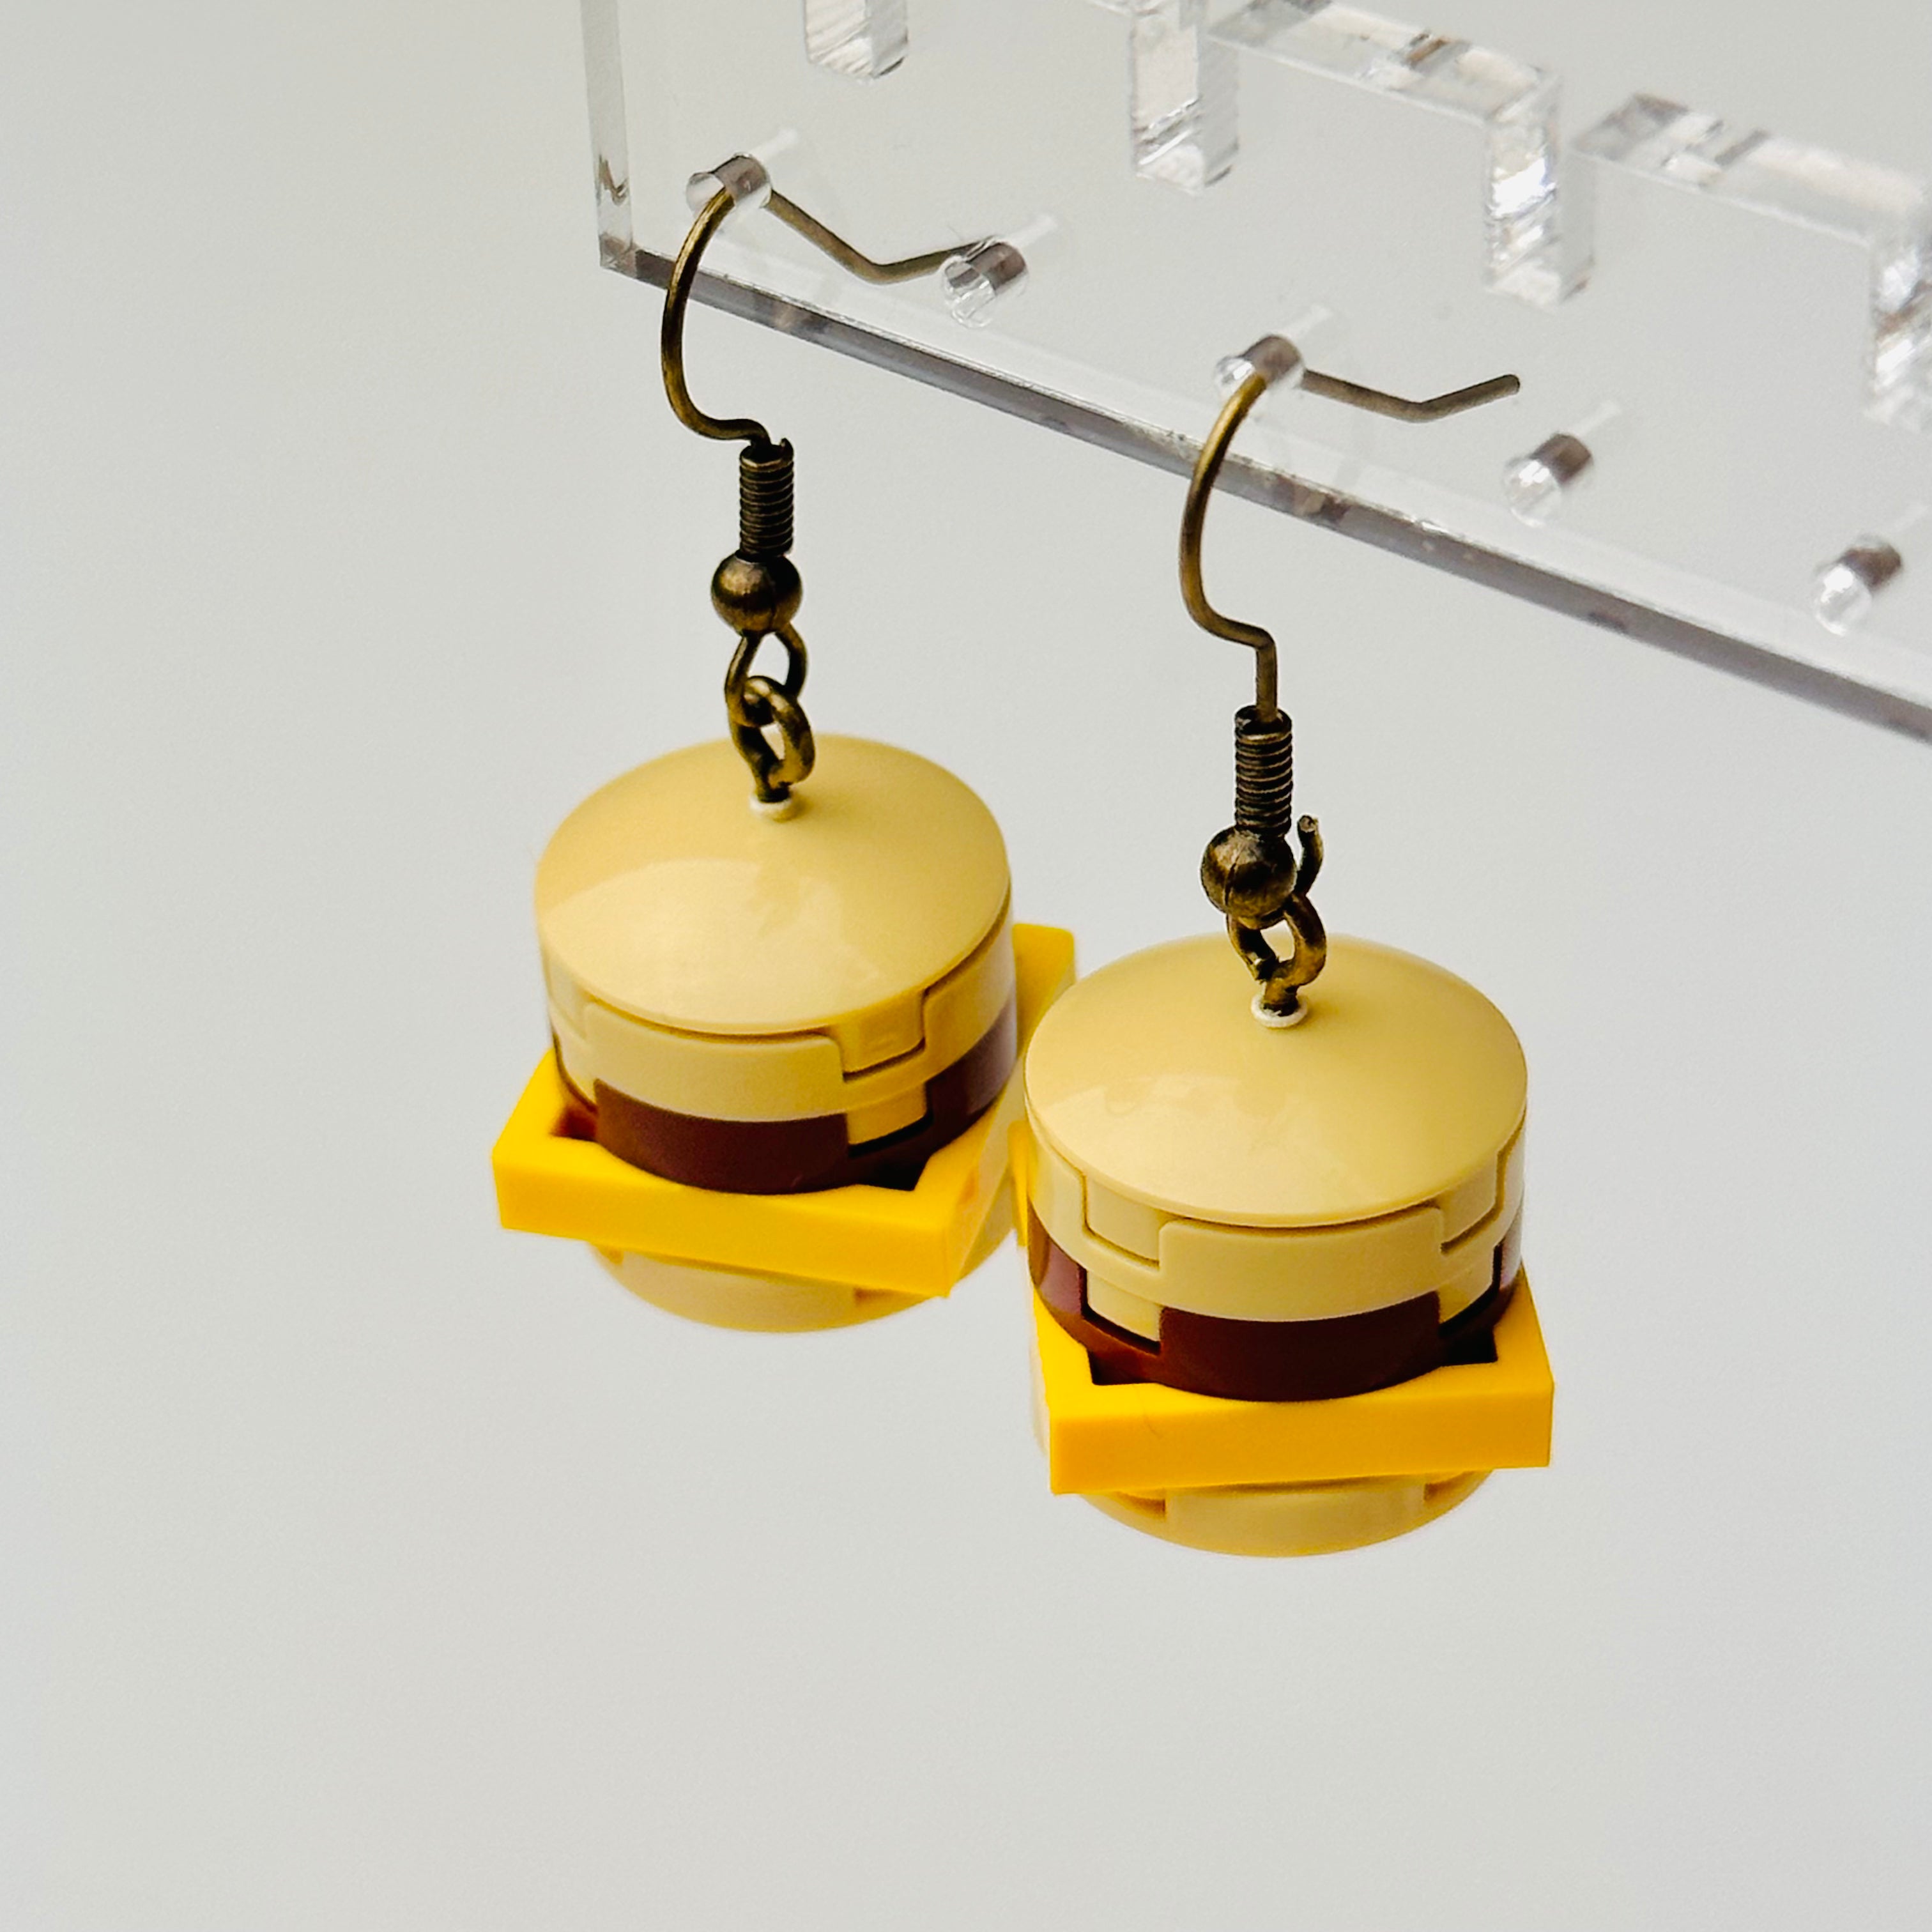 Cheesy Cheeseburger Brick Built Funny Food Earrings, Handmade with Lego®